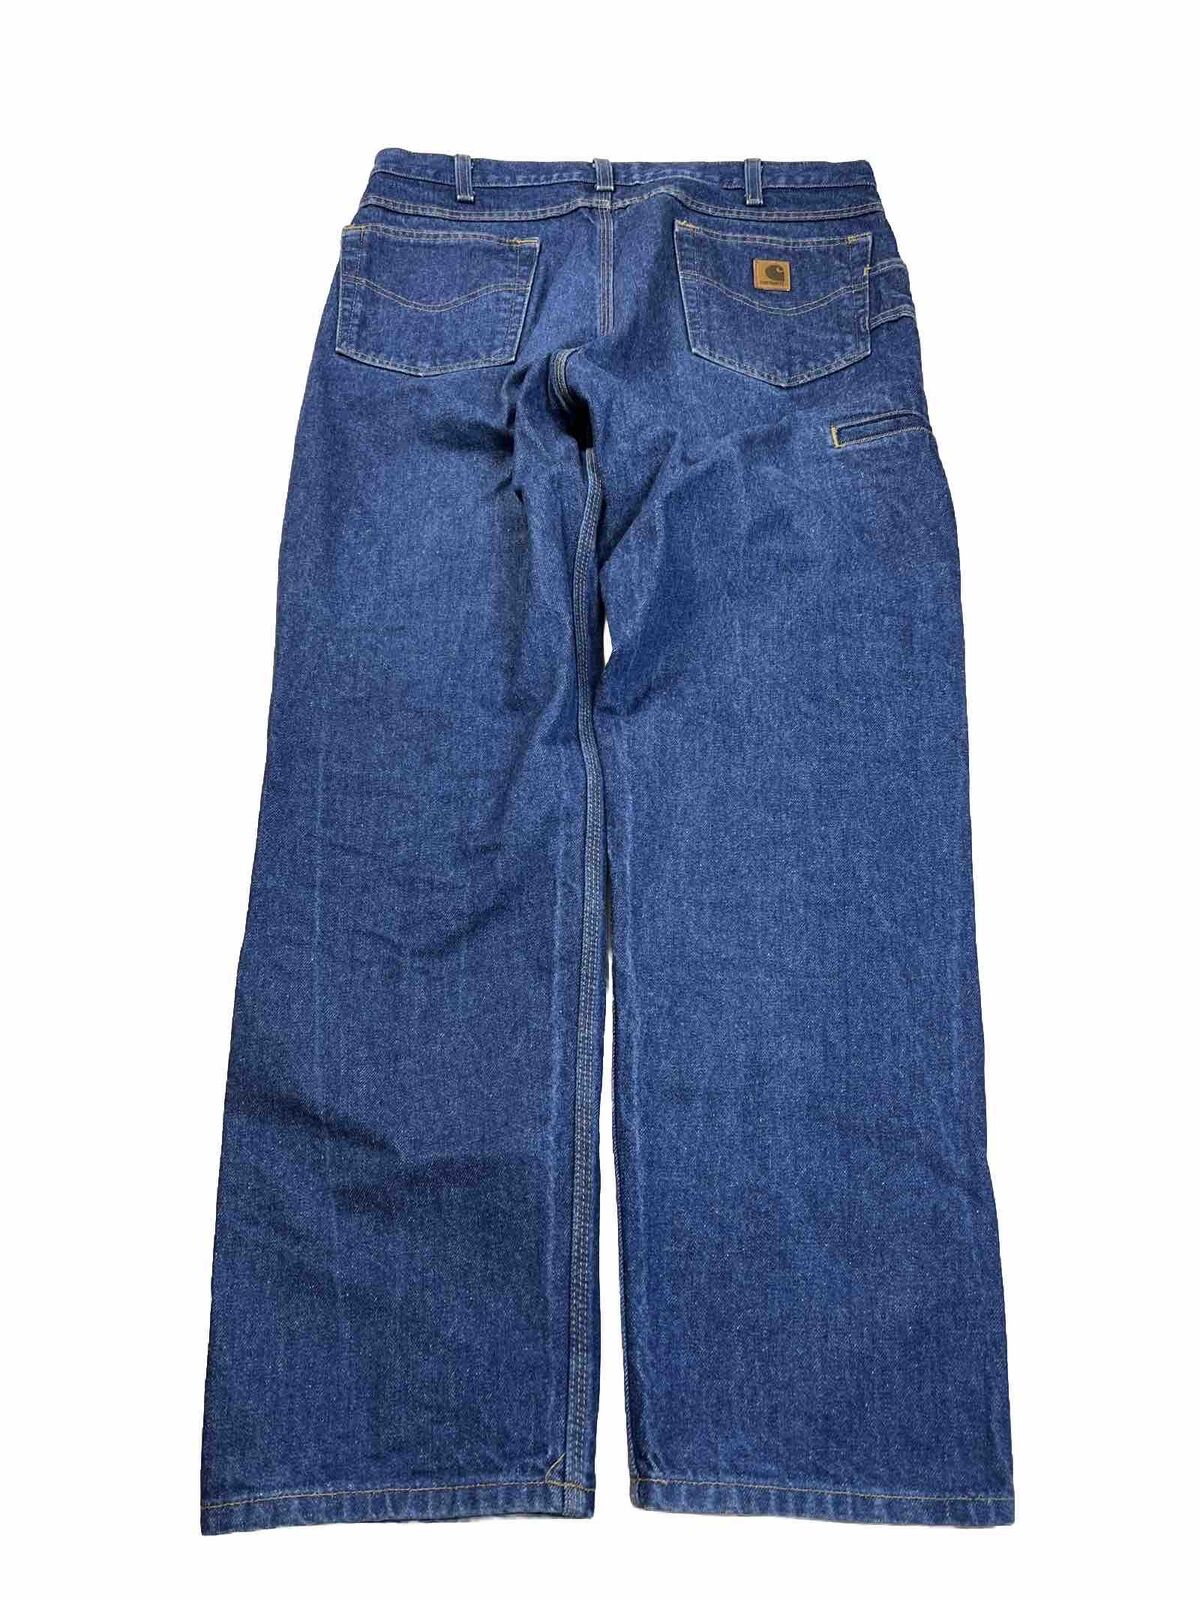 Carhartt Men's Medium Wash Relaxed Fit Straight Leg Jeans - 36x32